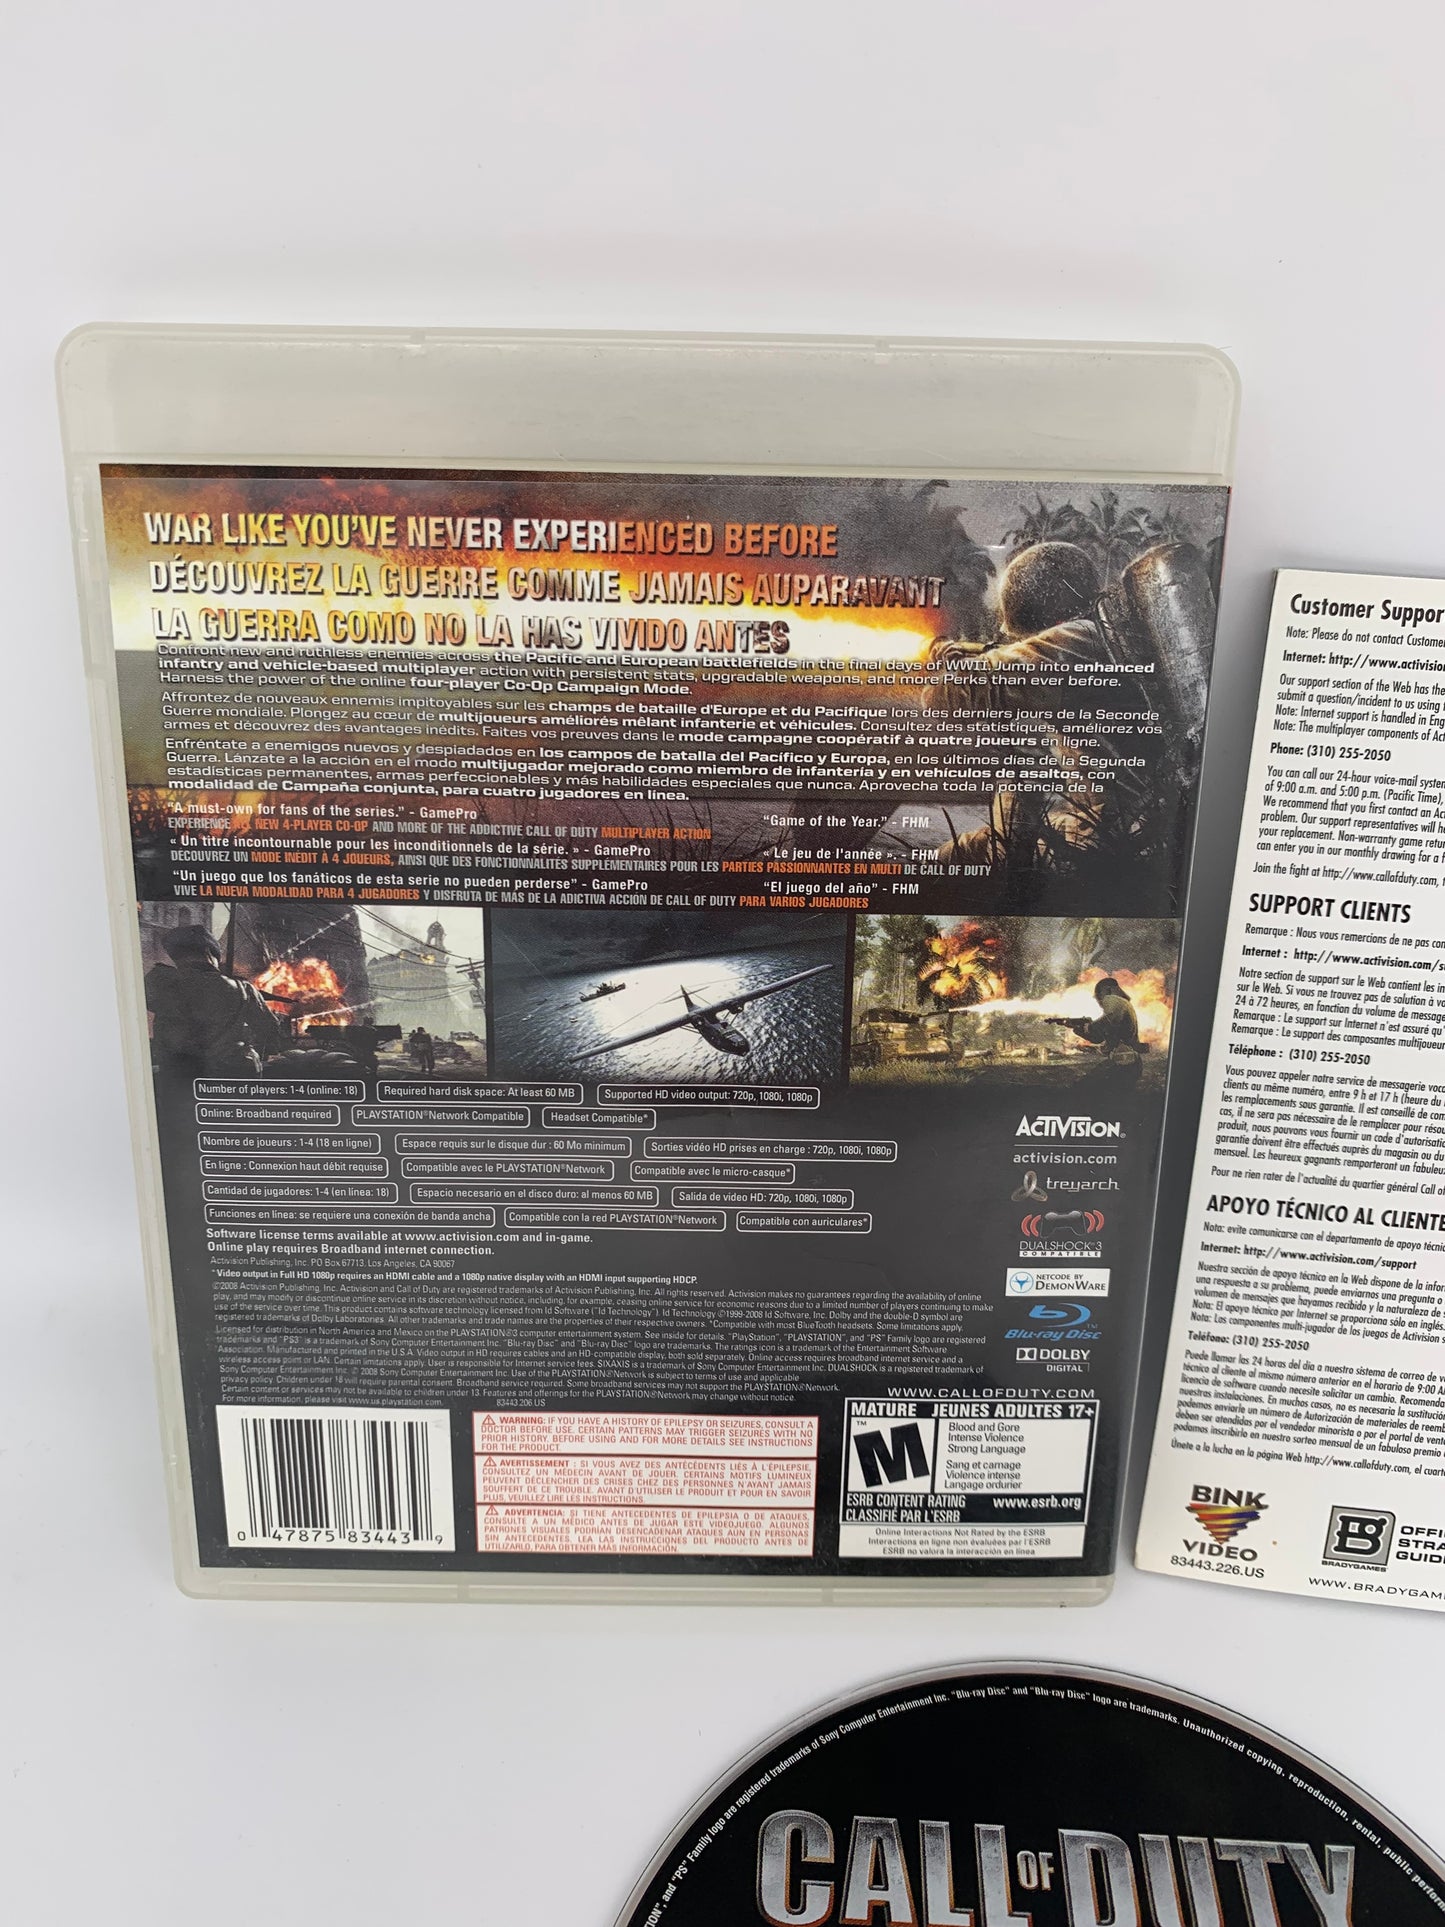 SONY PLAYSTATiON 3 [PS3] | CALL OF DUTY WORLD AT WAR